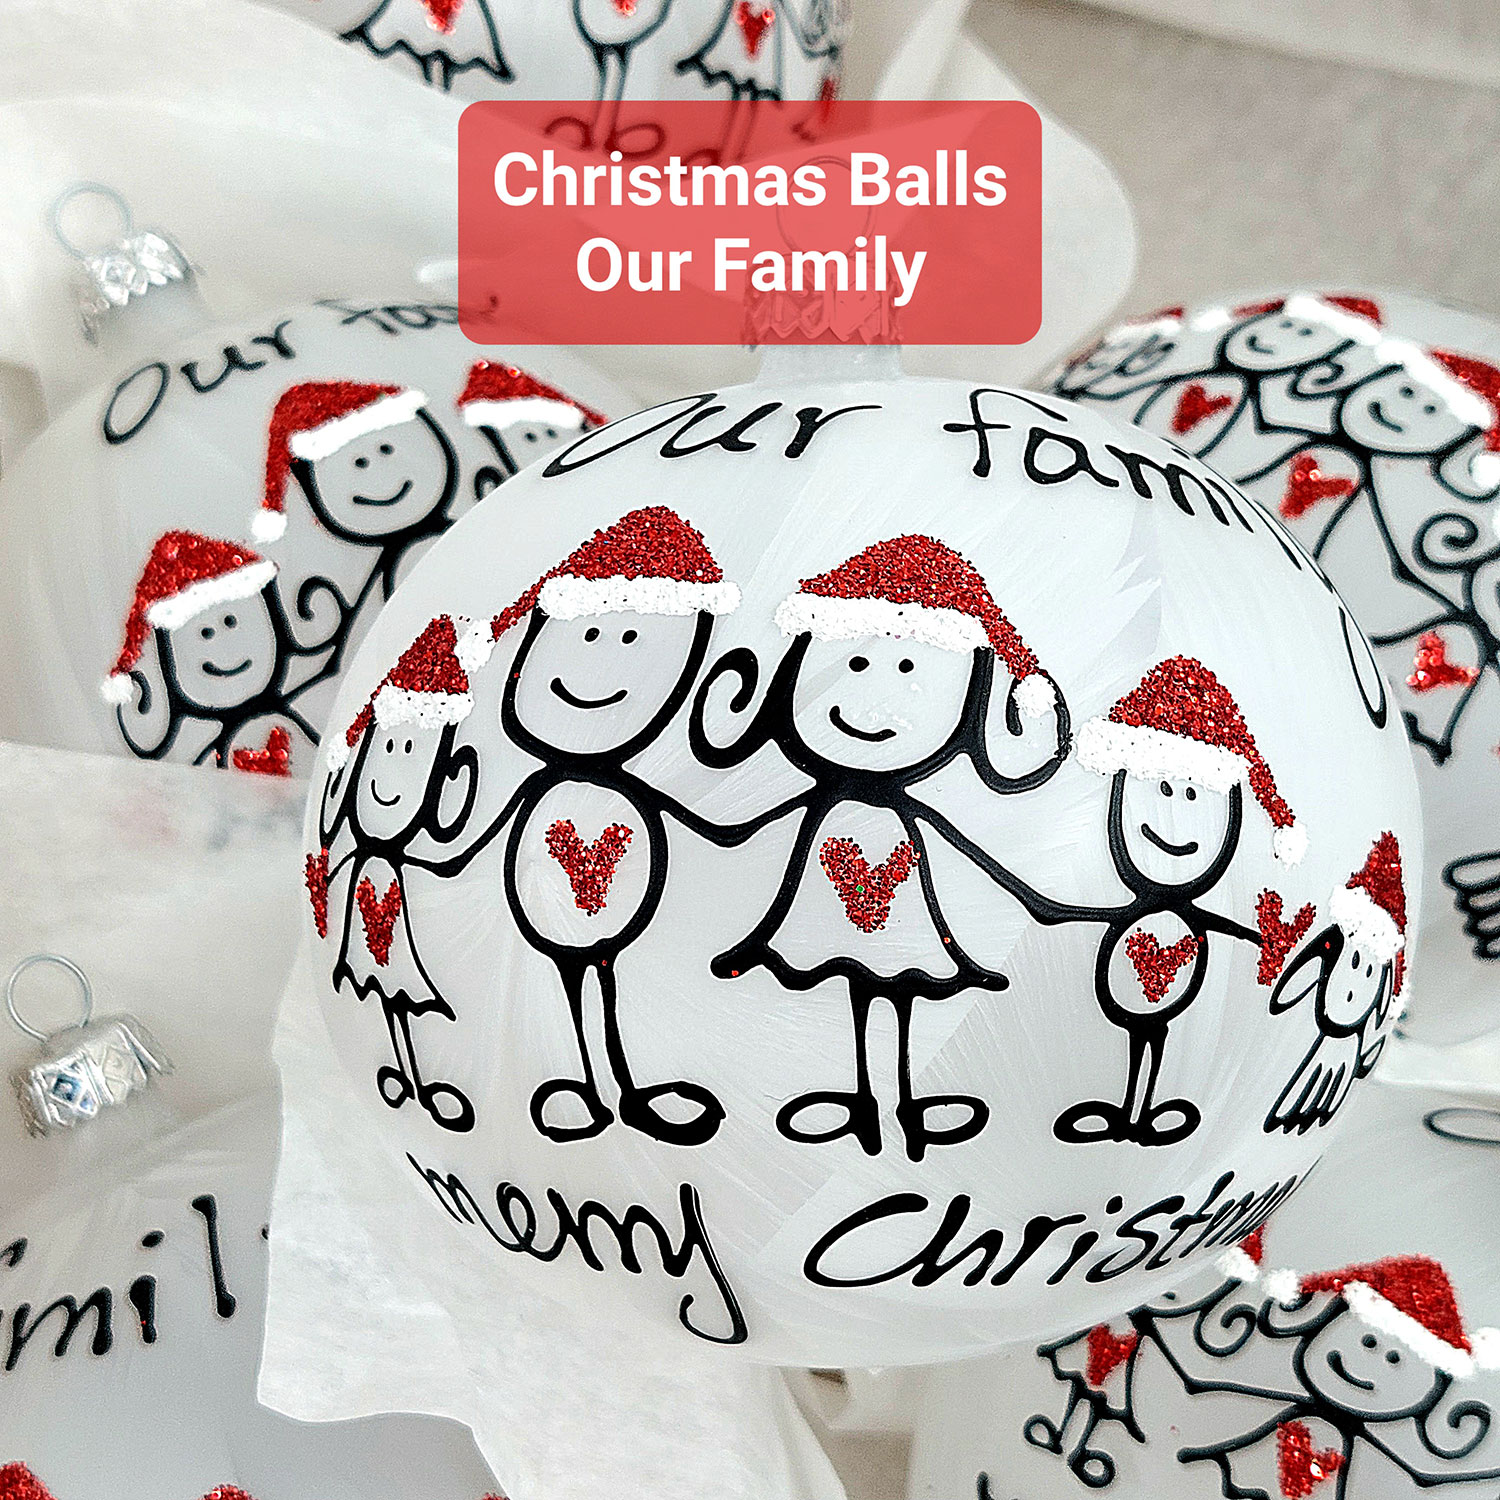 Christmas-balls-Our-Family-